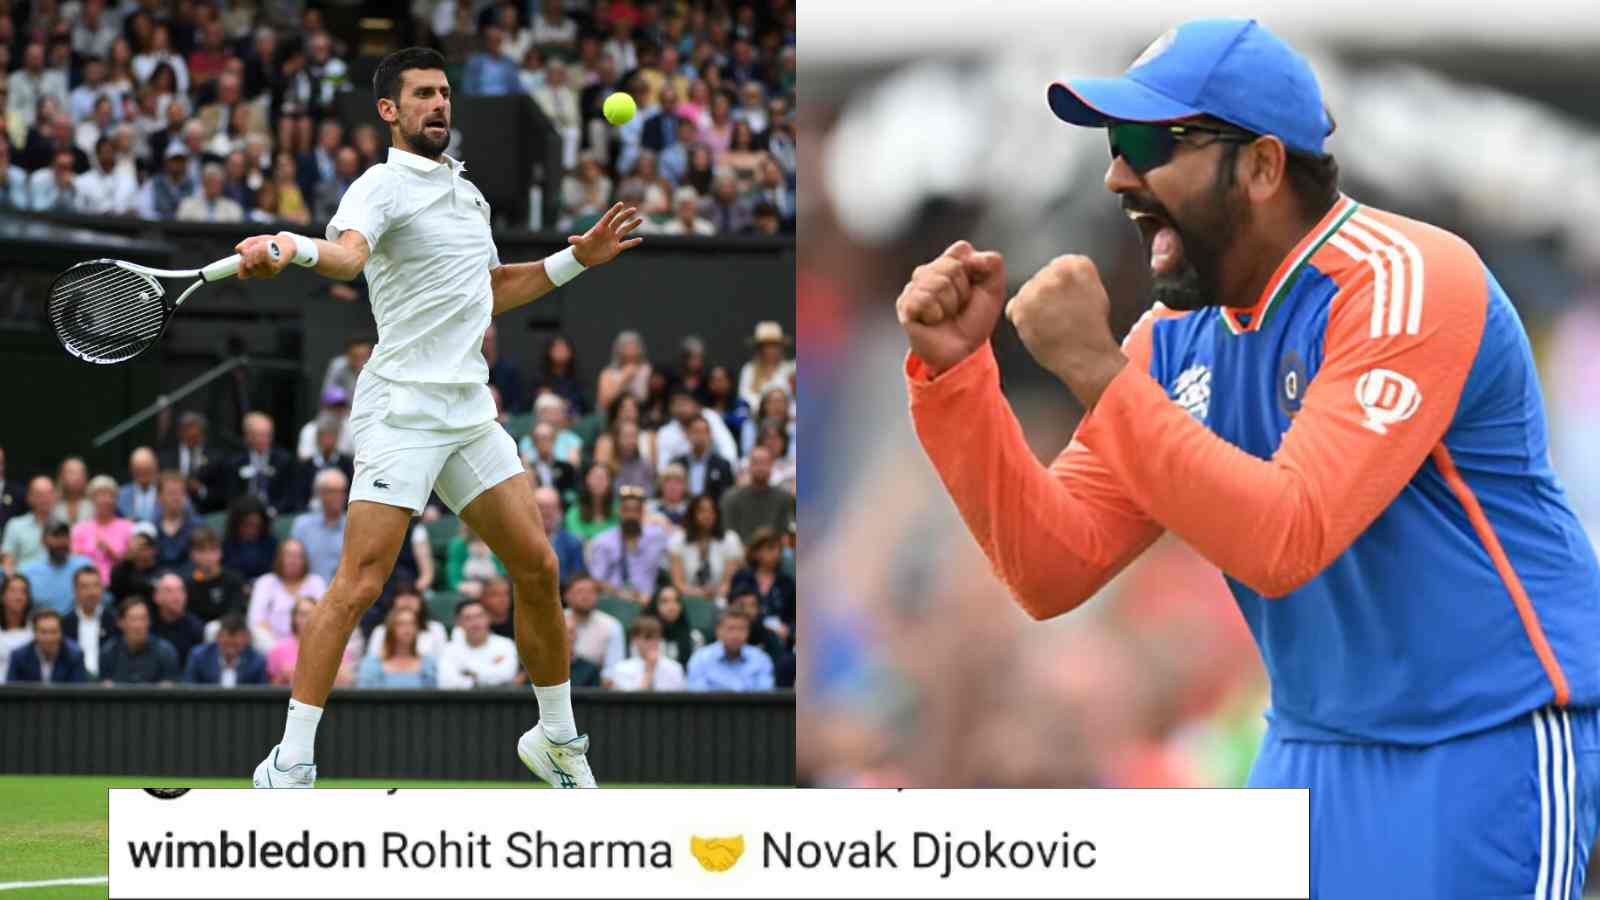 Wimbledon likens Rohit Sharma to Novak Djokovic with a mind-blowing post on Instagram